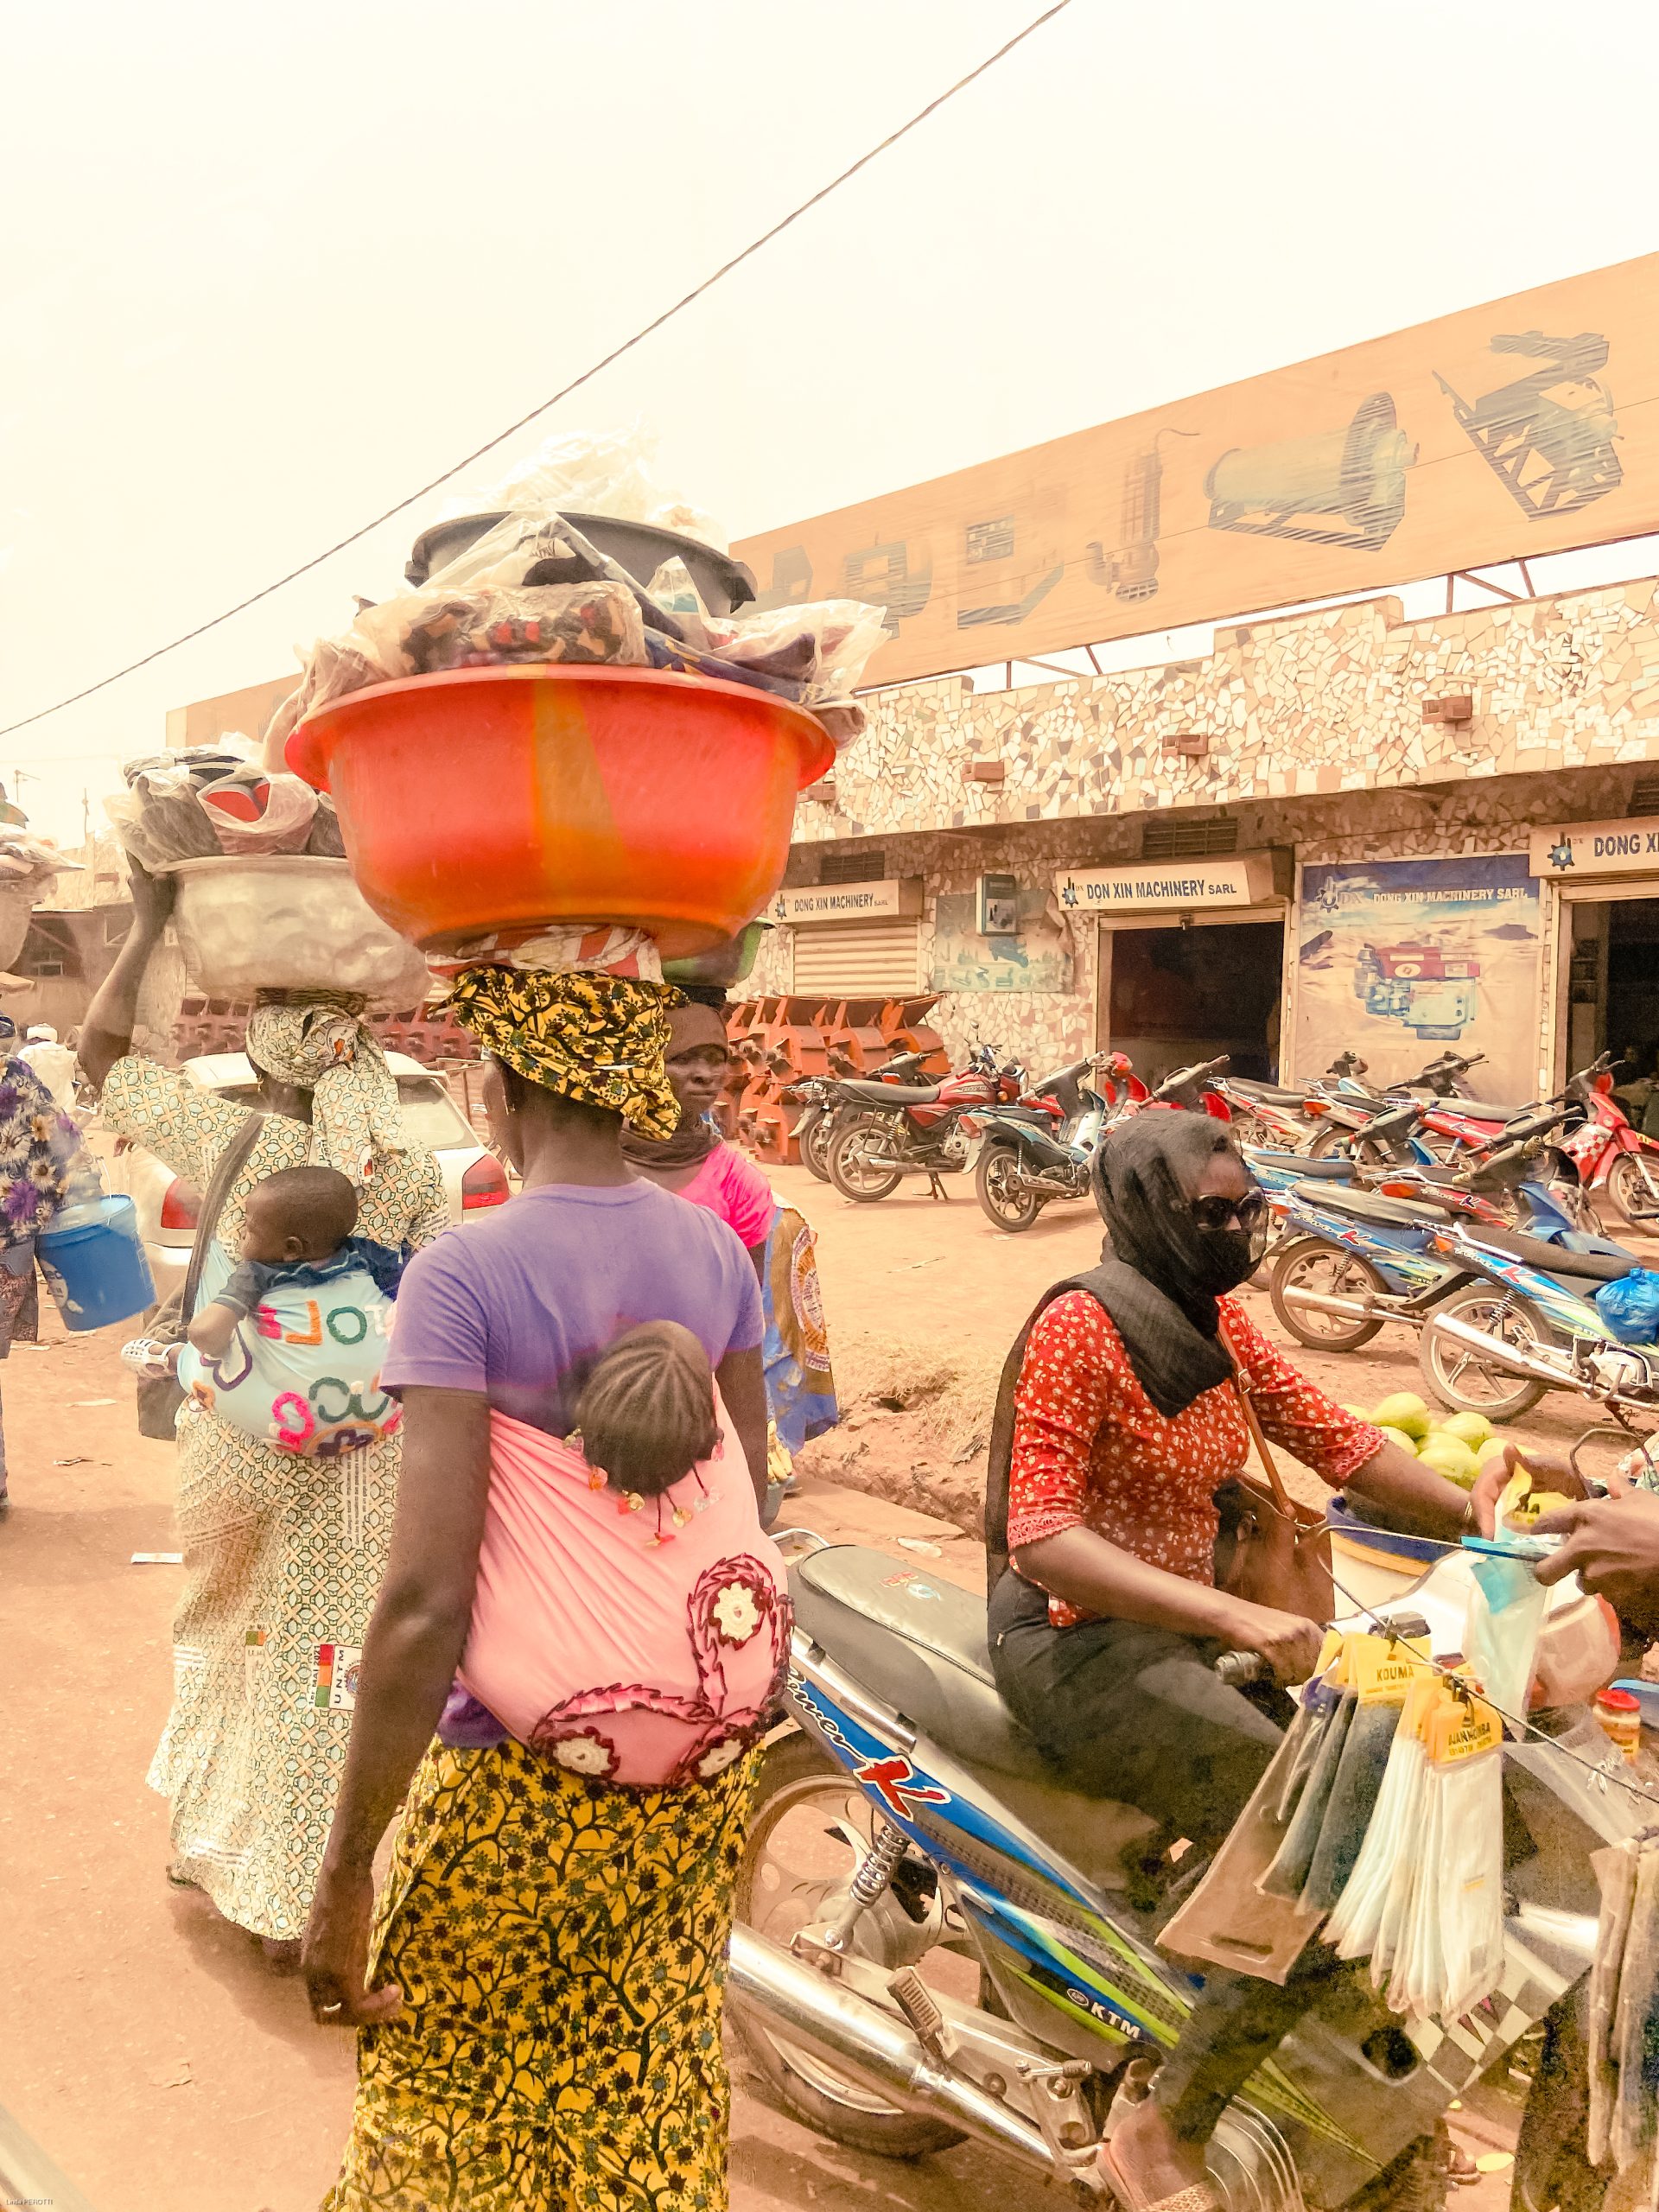 Visiter Bamako, Que faire à Bamako, endroit à visiter à Bamako, Blog voyage Linda Beletti